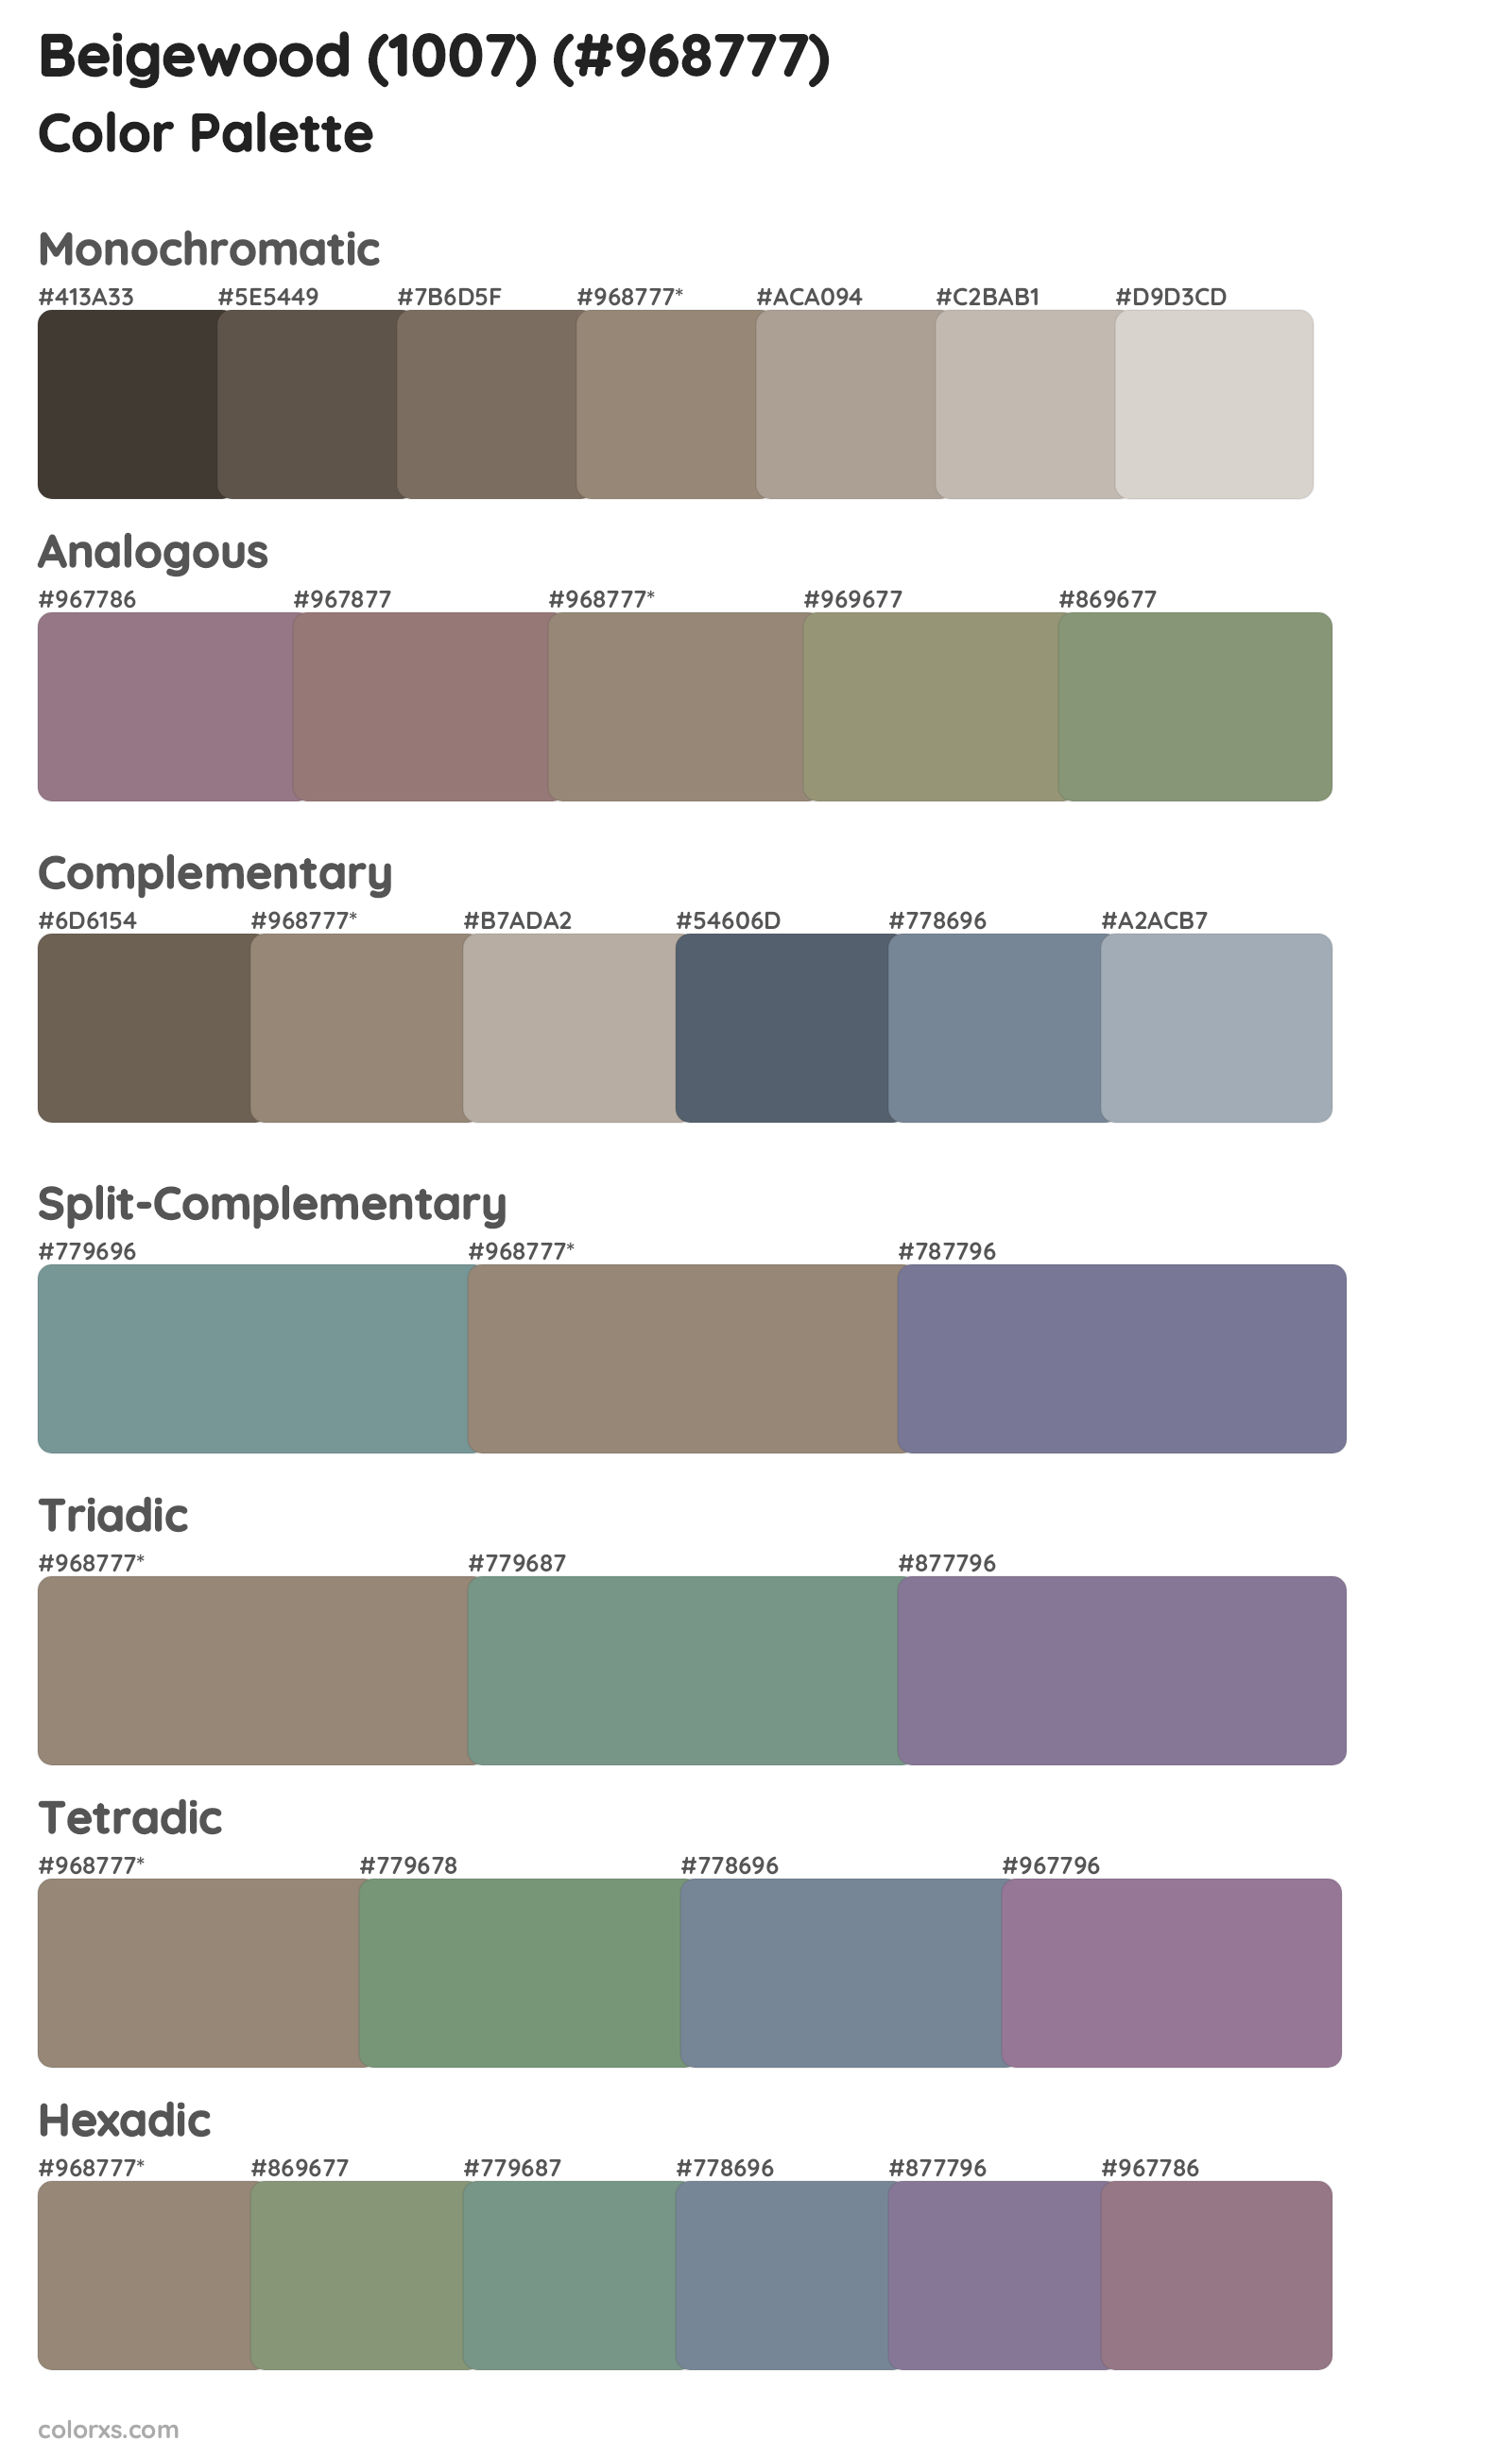 Beigewood (1007) Color Scheme Palettes